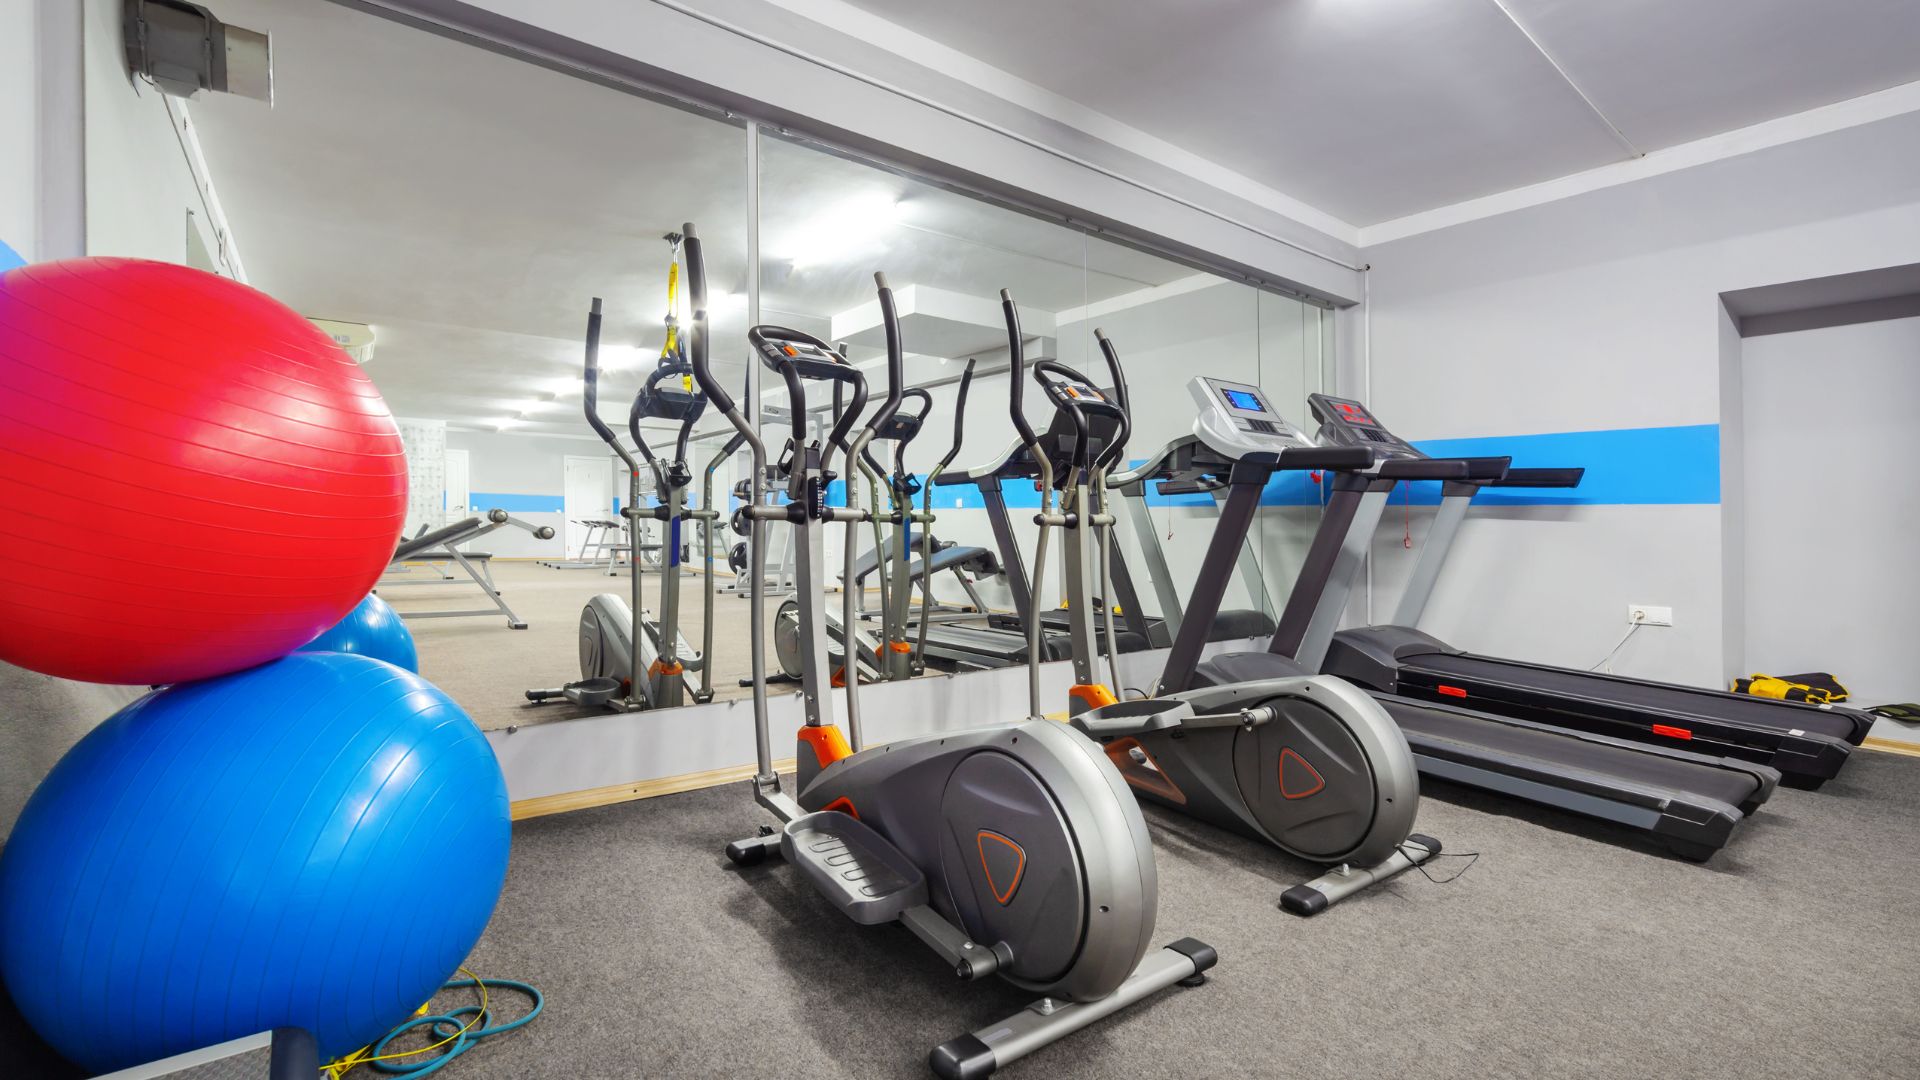 Basement Gym room with gym balls and stationary exercise bike